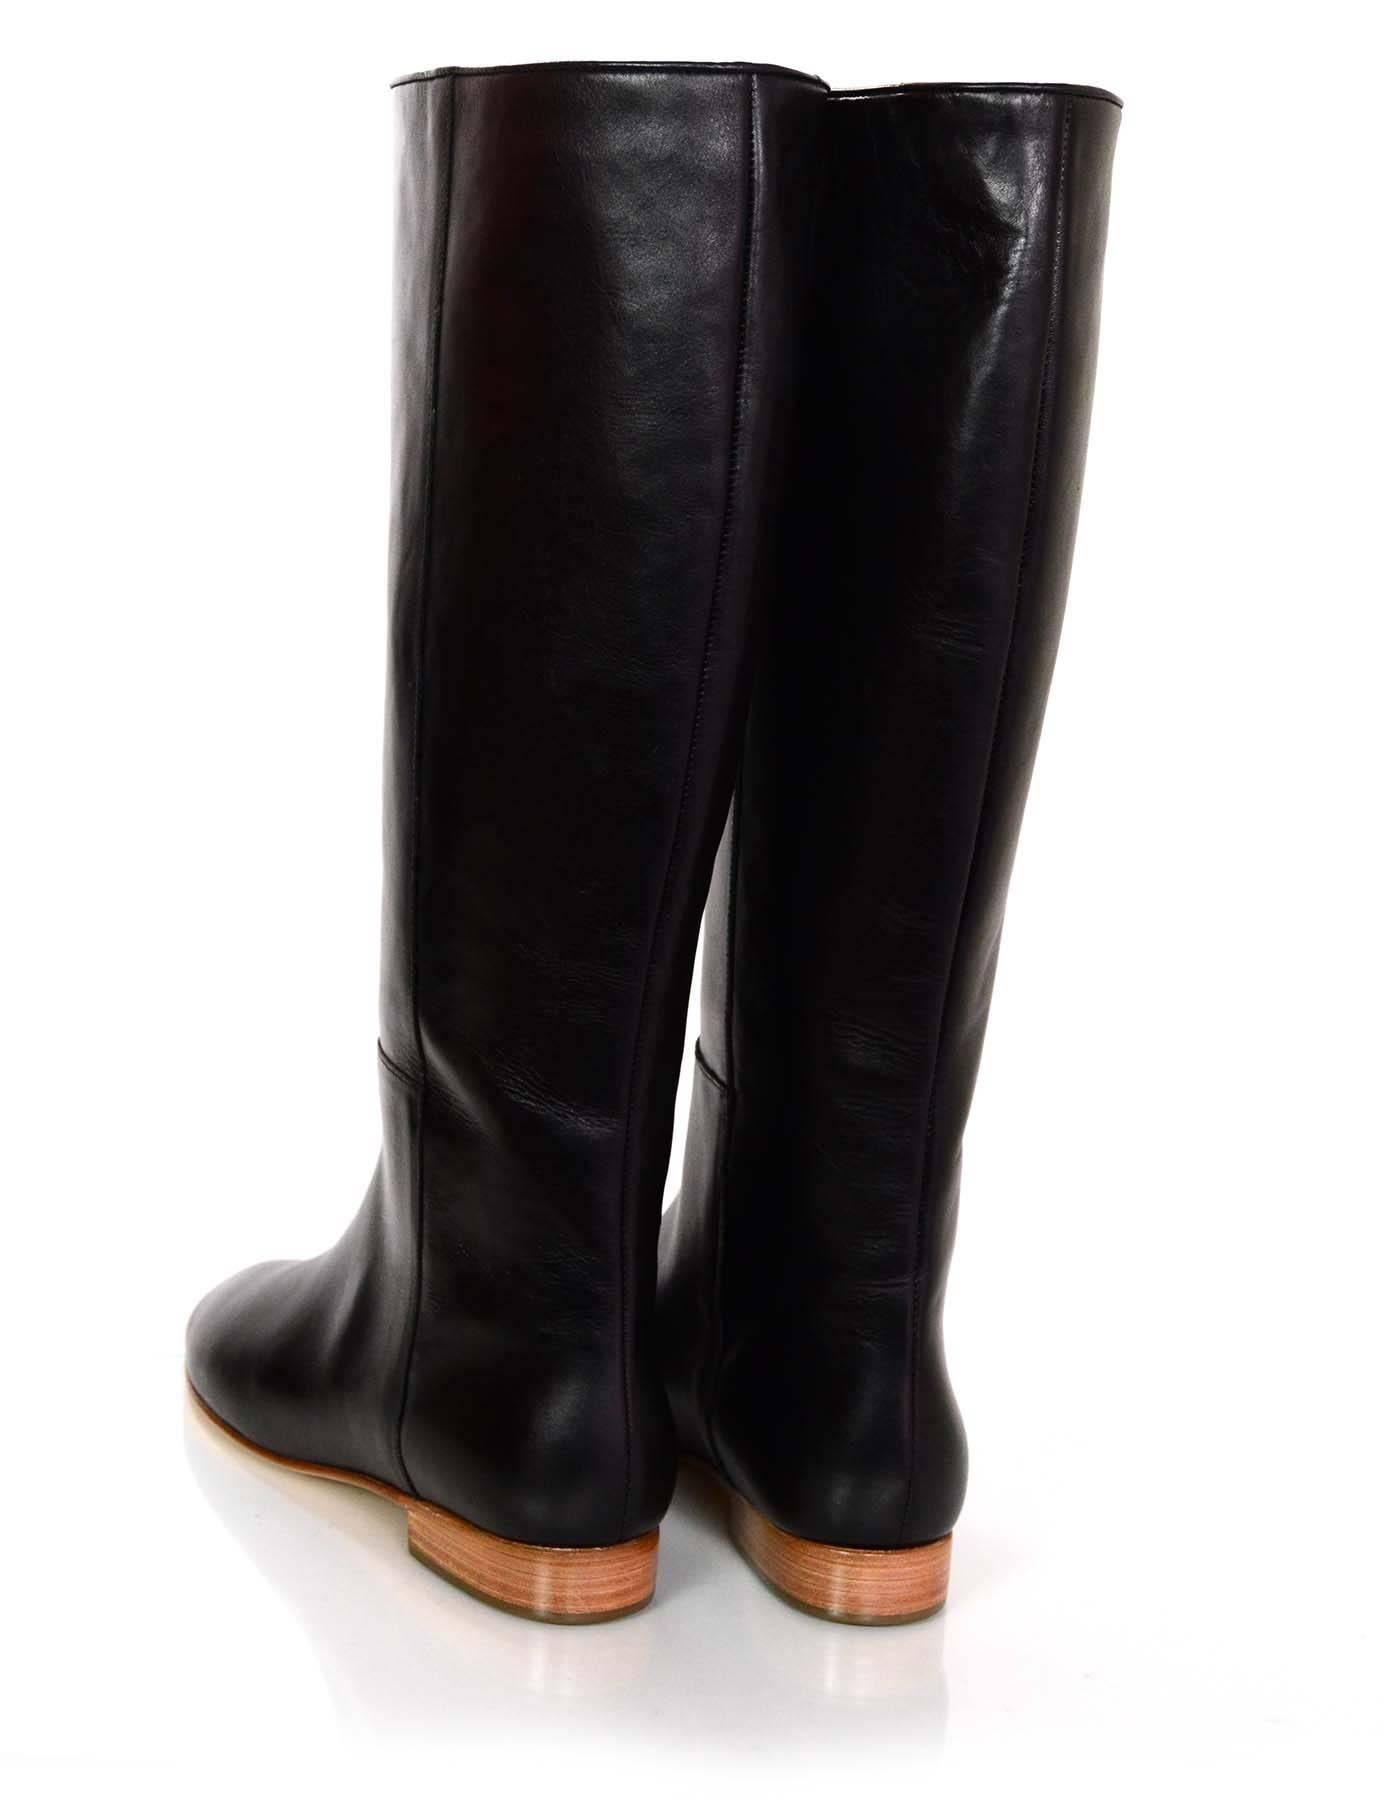 Loeffler Randall Black Leather Boots Sz 8 1